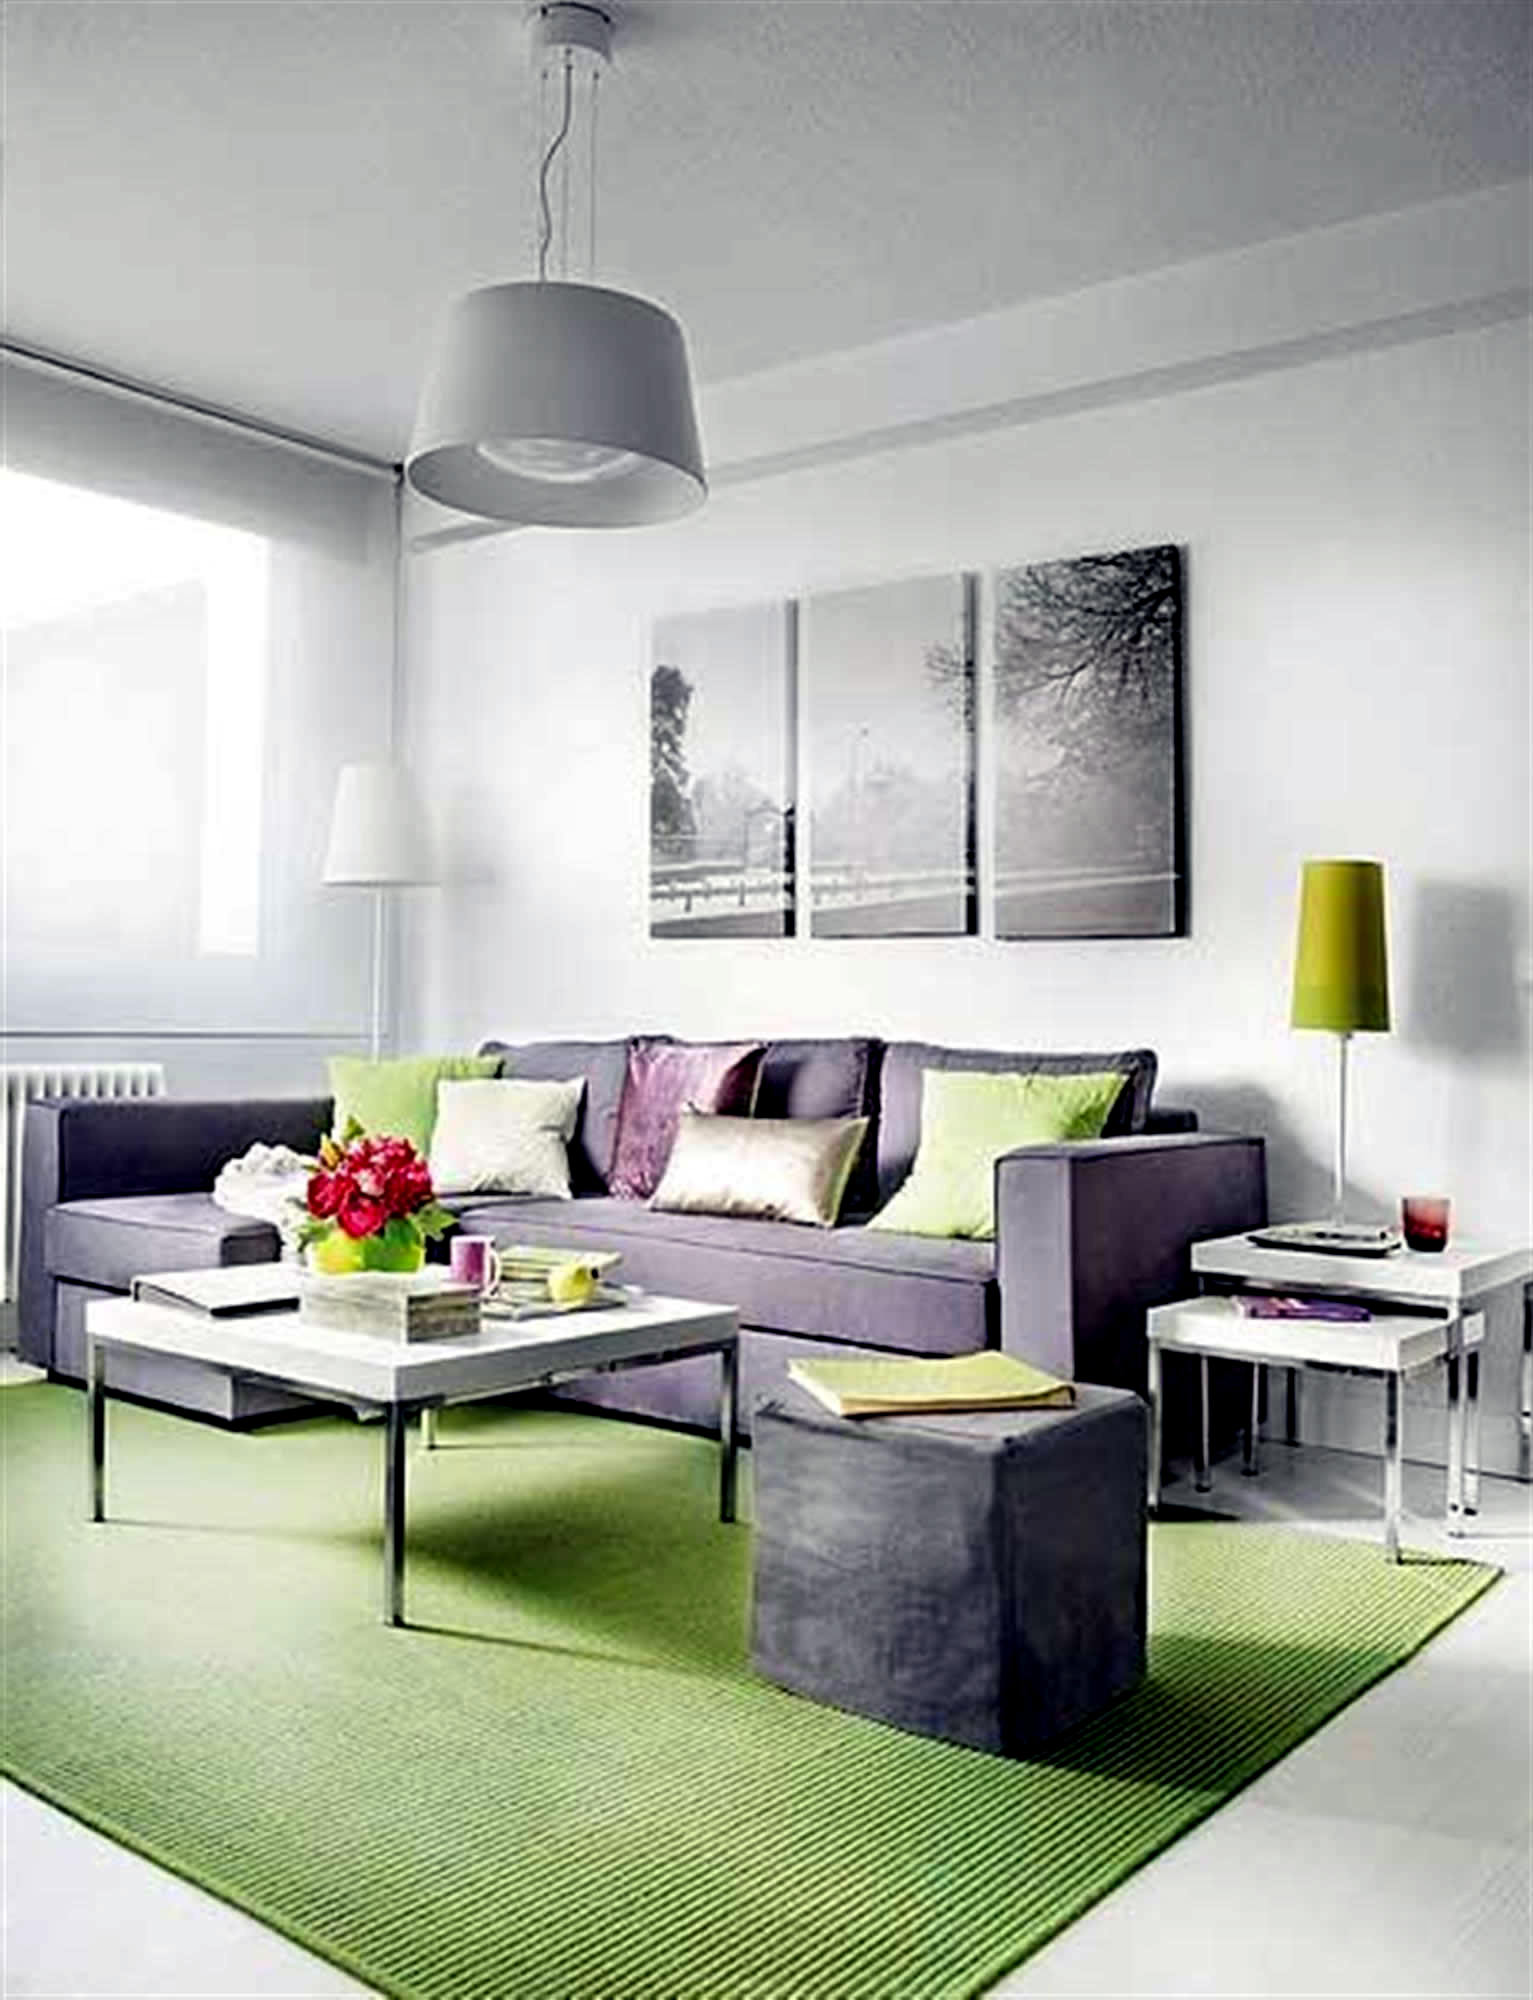 Carpet Design Ideas for Chic Living Room Decor